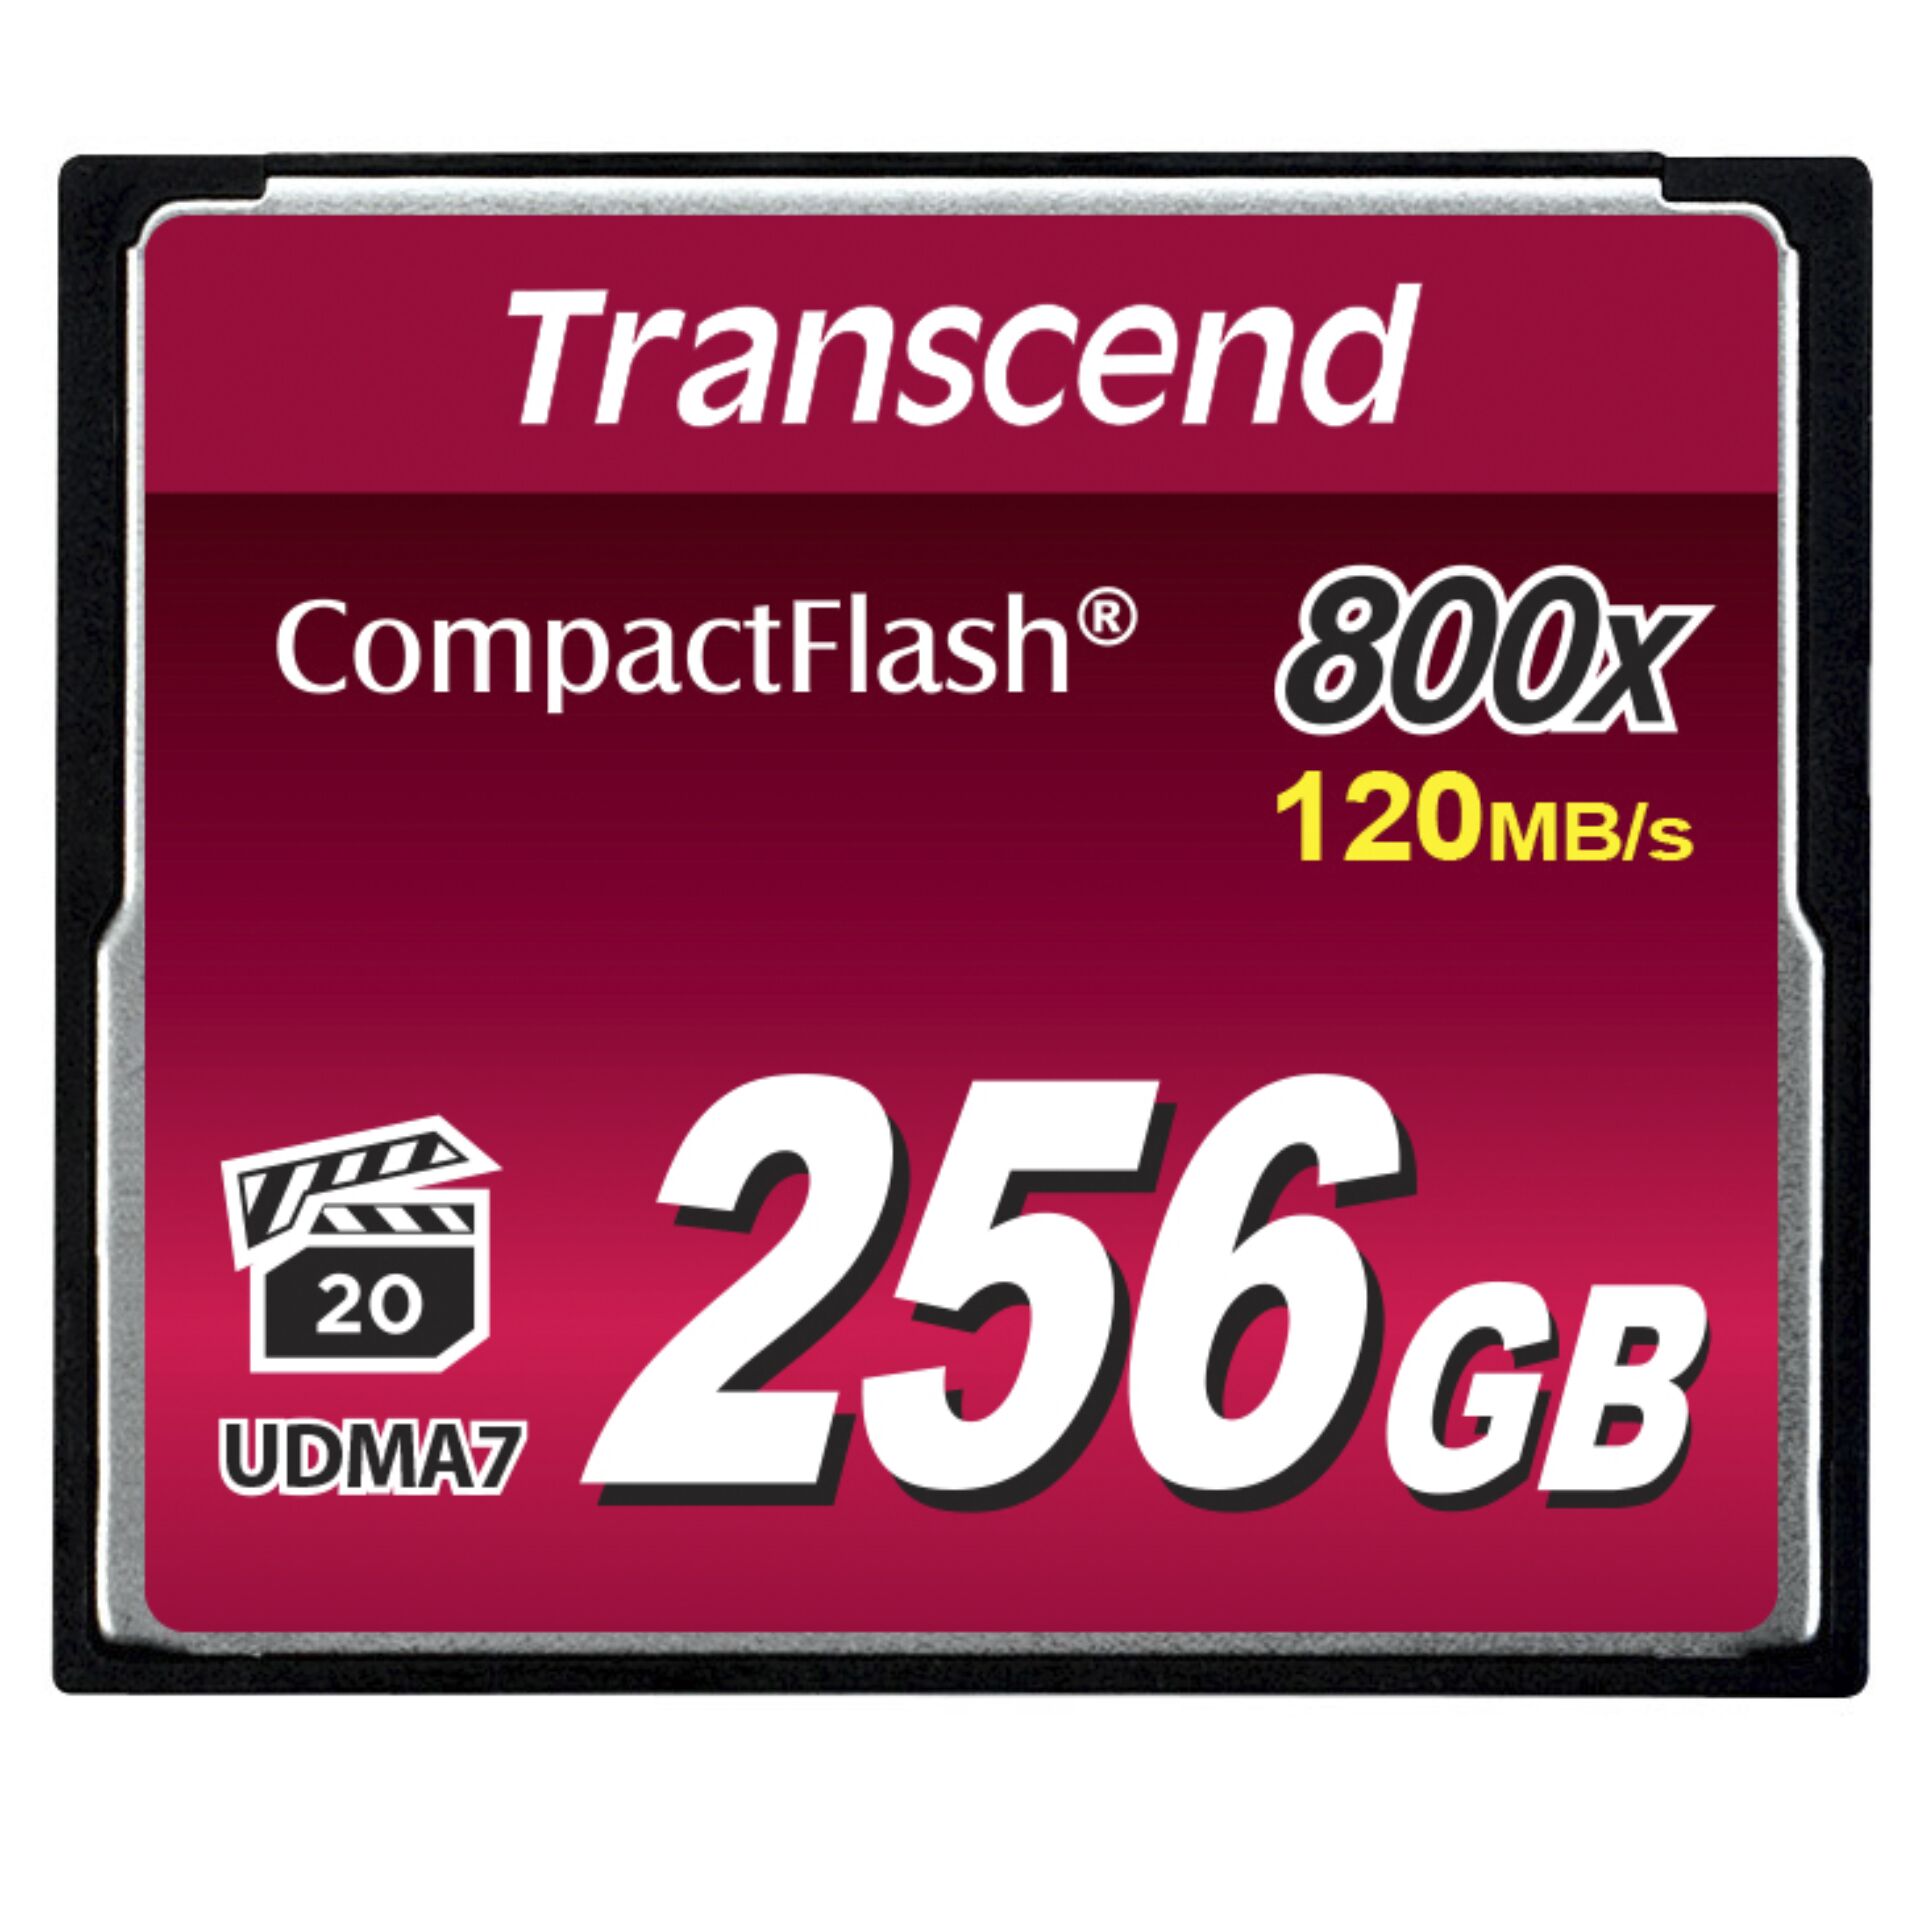 Transcend Compact Flash 256GB 800x